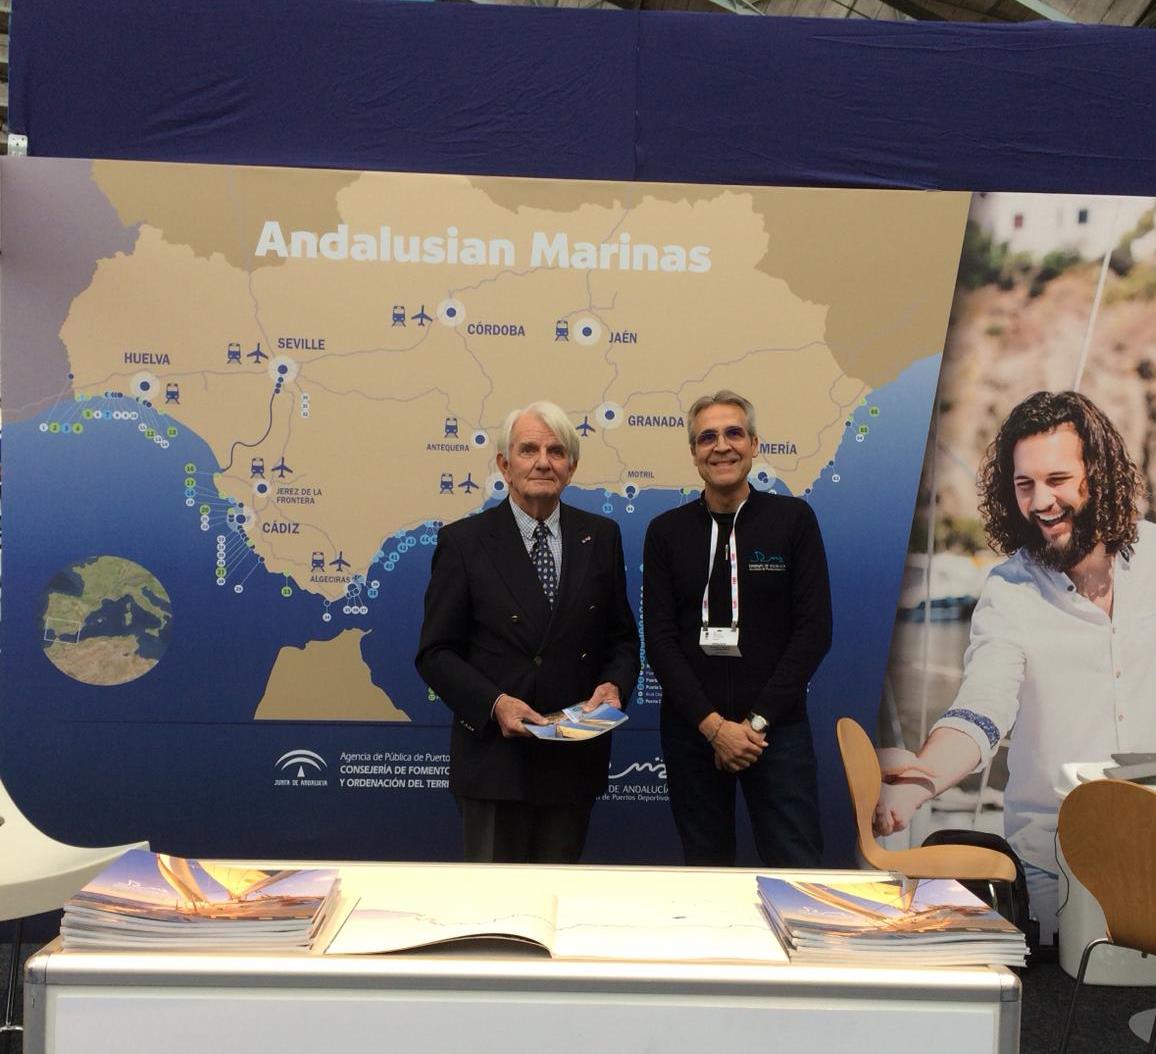 Manuel Raigon, managing director Marinas del Mediterraneo, with a navigator interested in the exhibitor